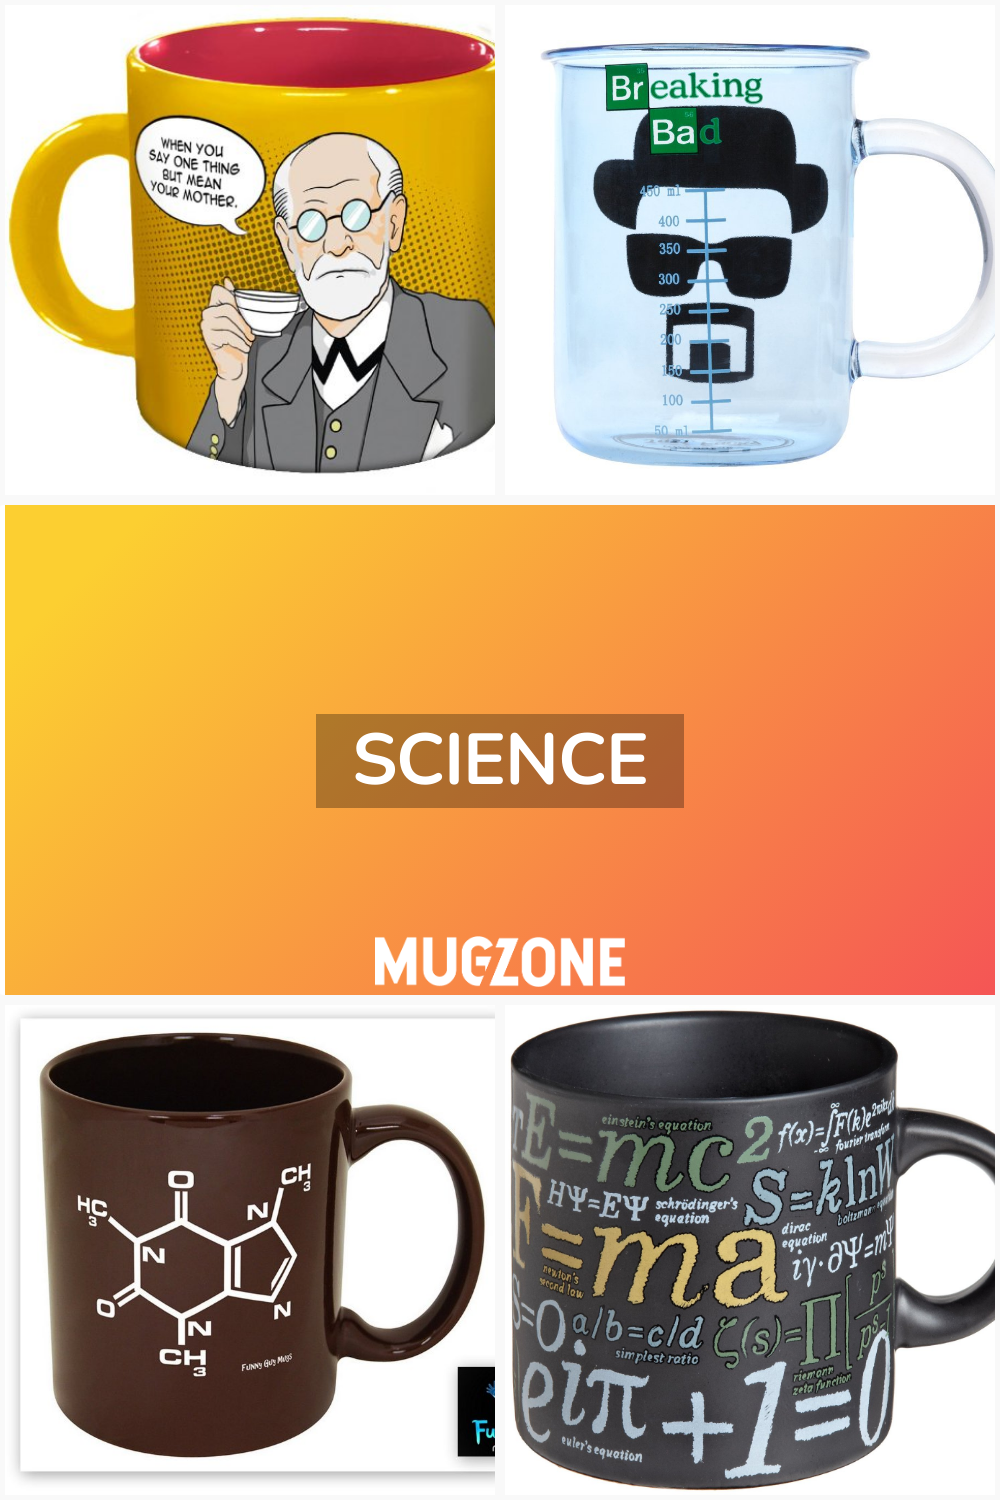 science // Mug Zone